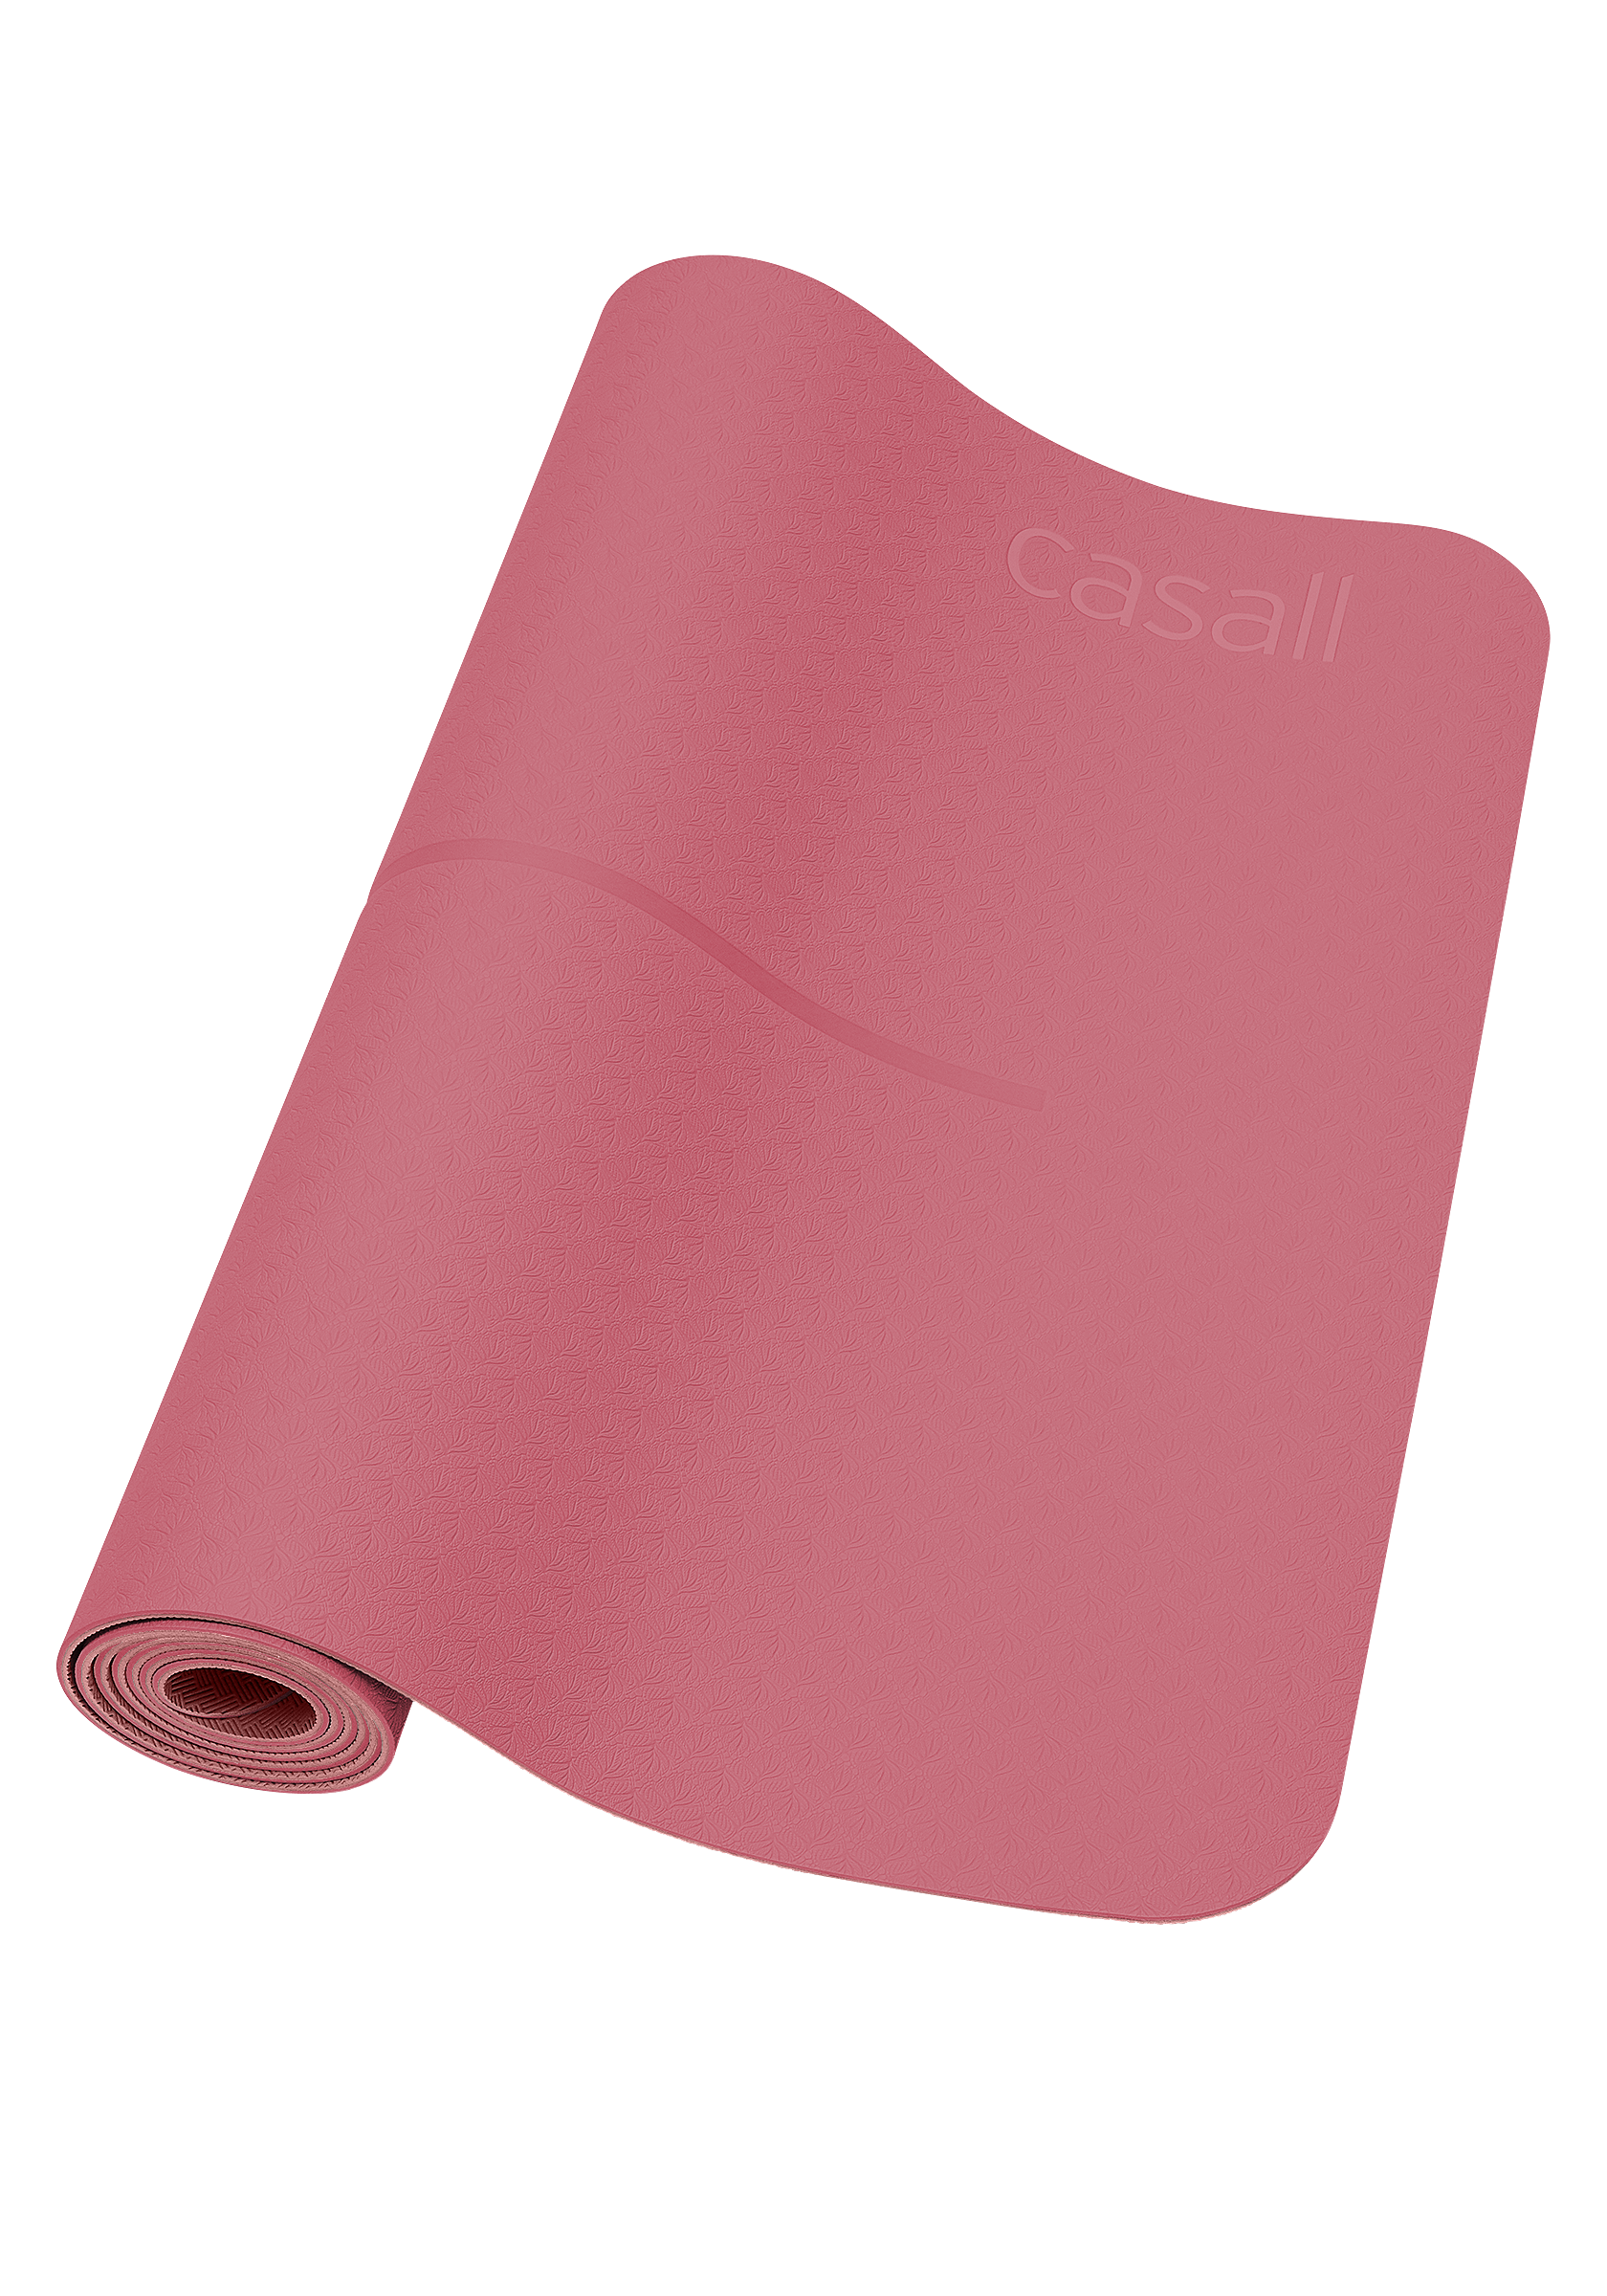 Casall EXERCISE BALANCE - Tapis de yoga - lemonade pink/rose 